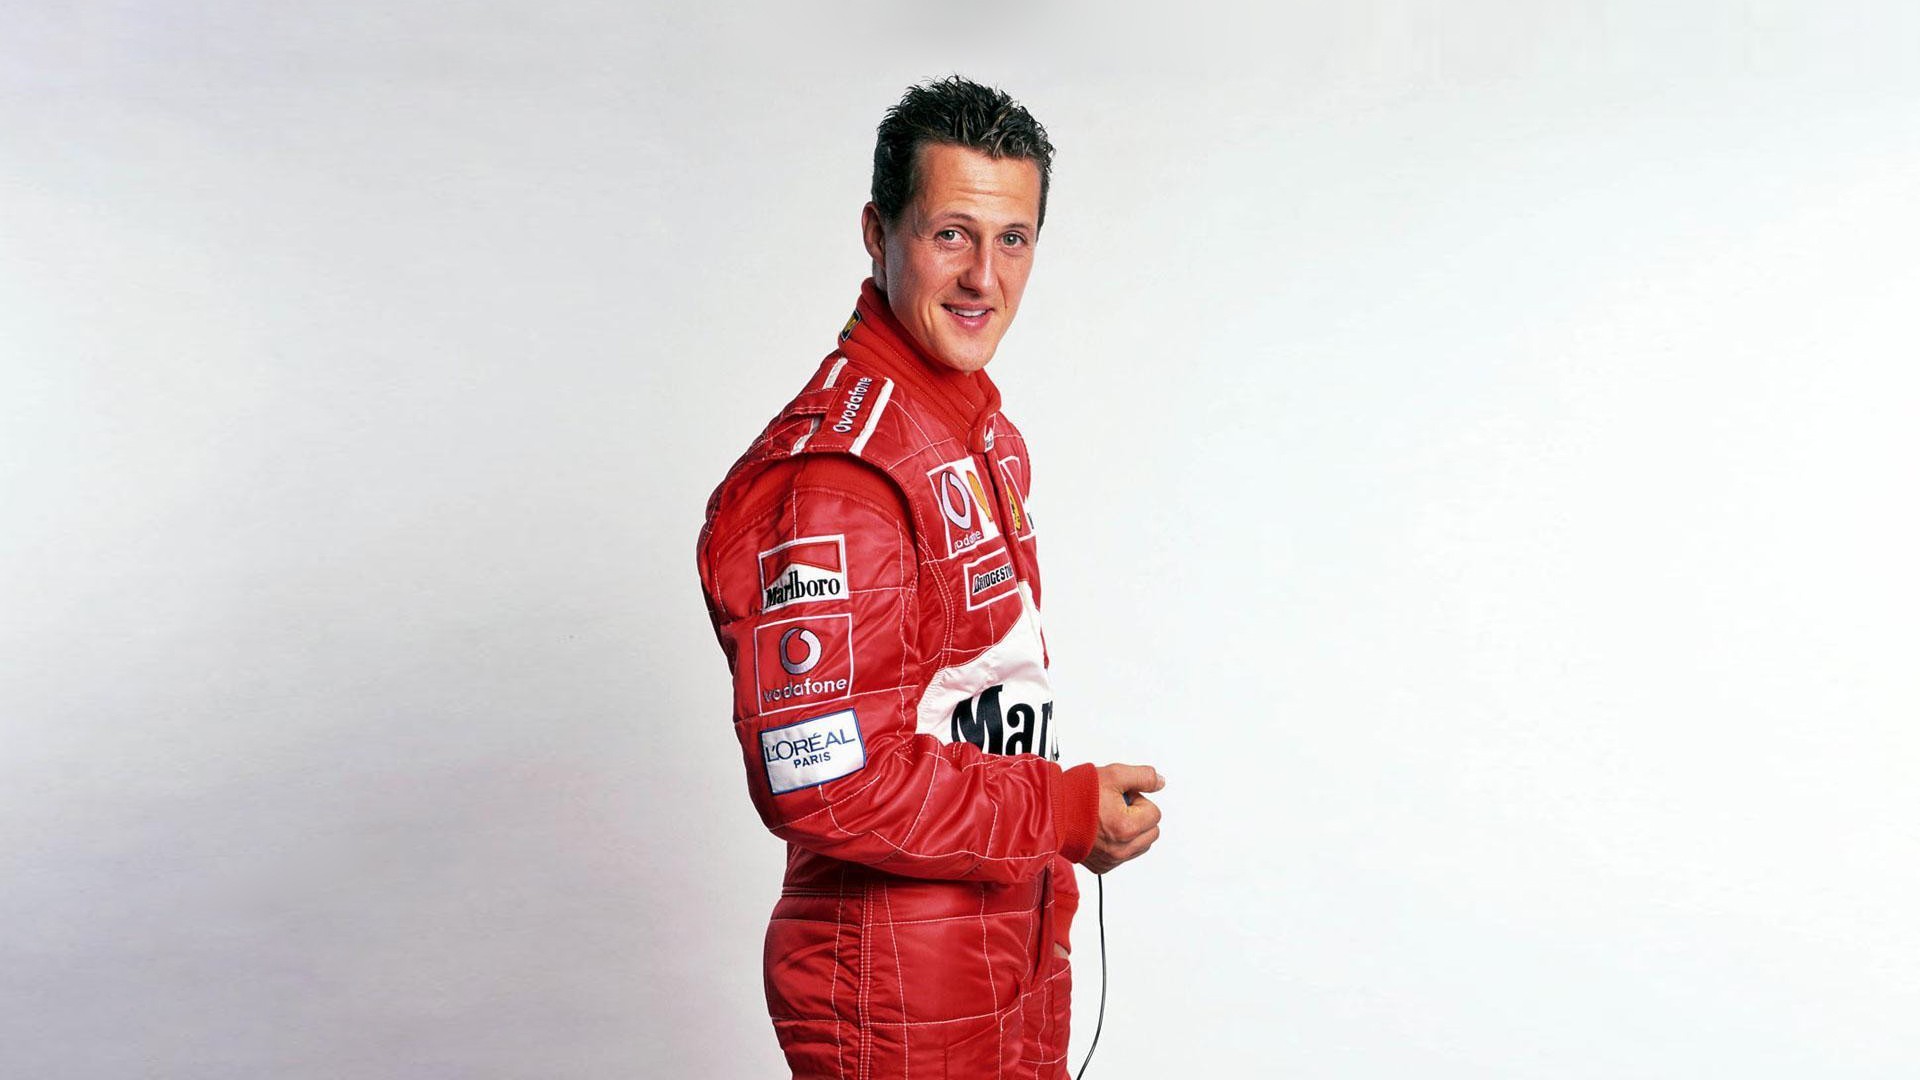 People 1920x1080 Formula 1 Scuderia Ferrari Michael Schumacher racing motorsport German Racing driver men